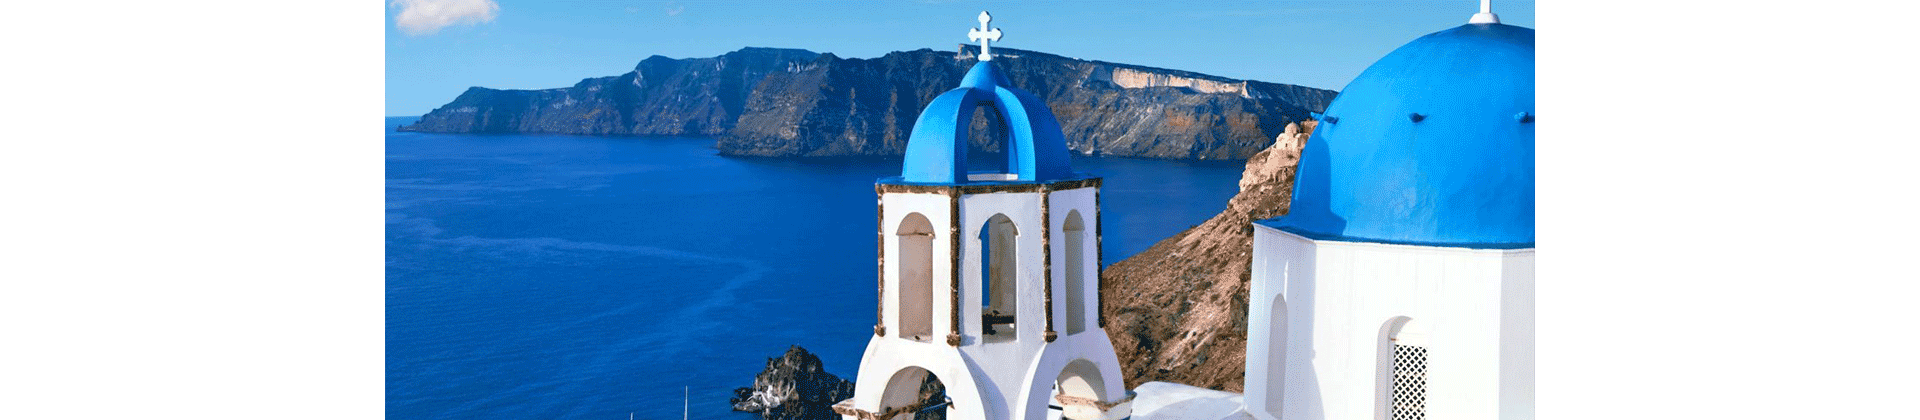 Greek Island Santorini